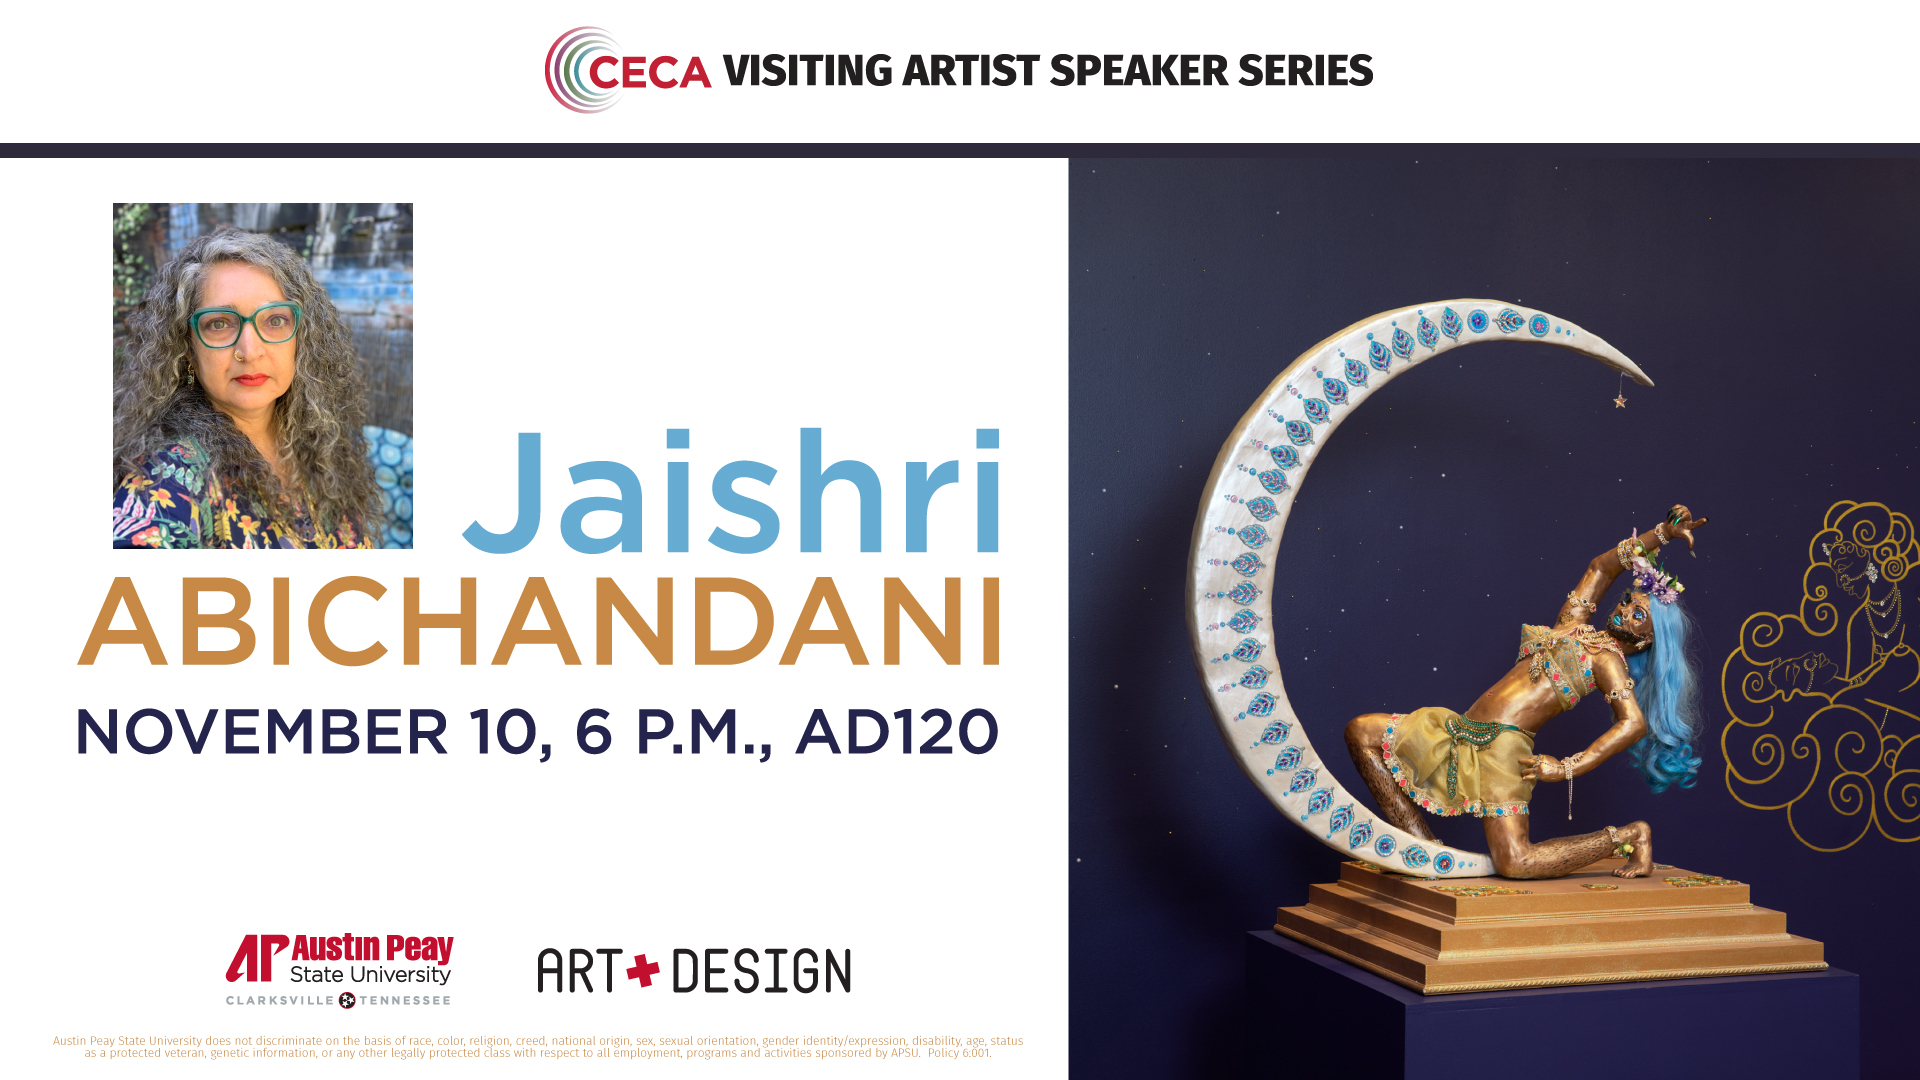 Art + Design welcomes internationally recognized artist Jaishri Abichandani to continue CECA Visiting Artist Speaker Series